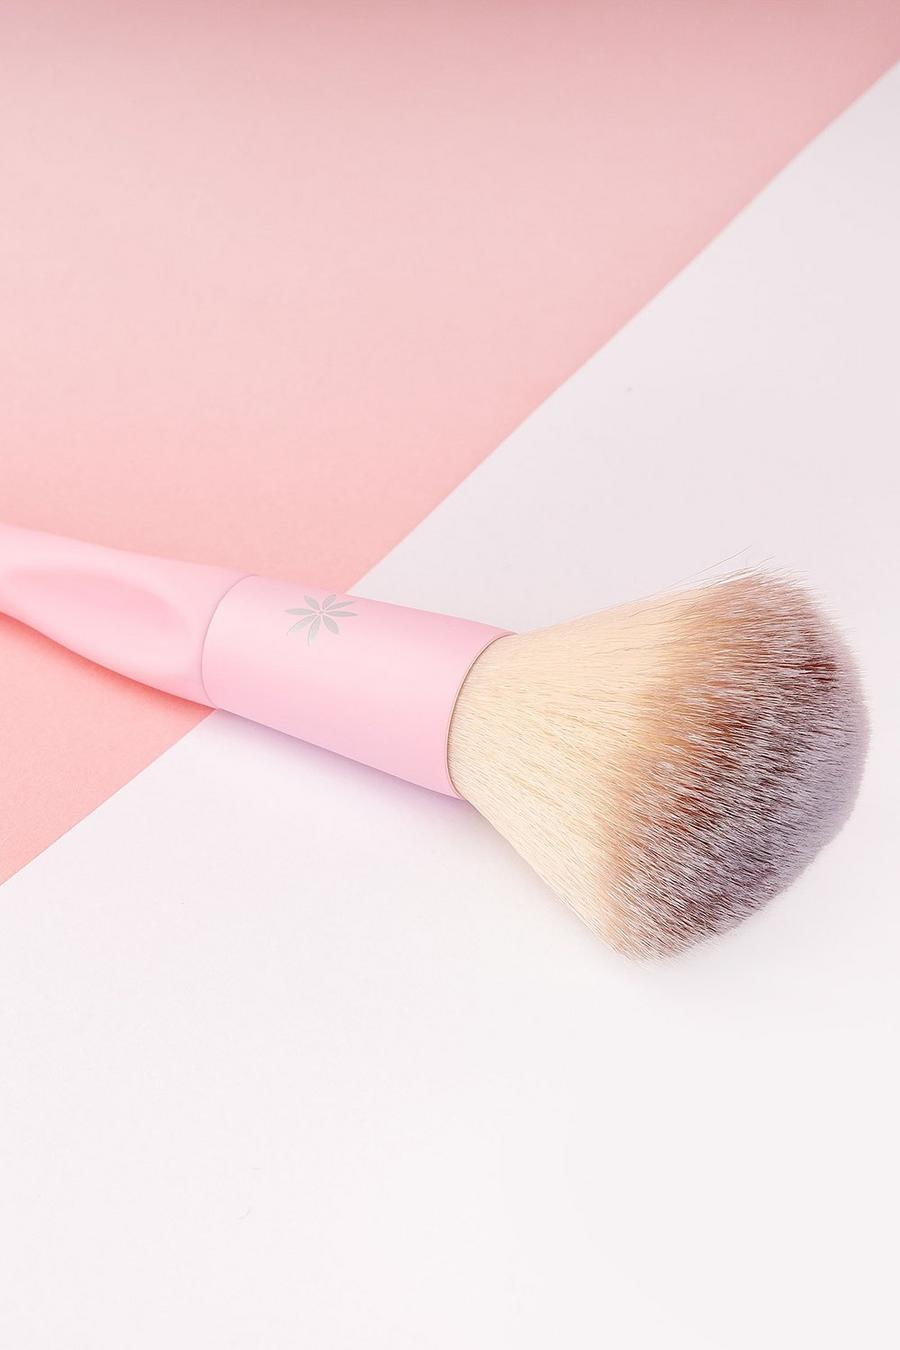 Brushworks - Pinceau à blush, Baby pink